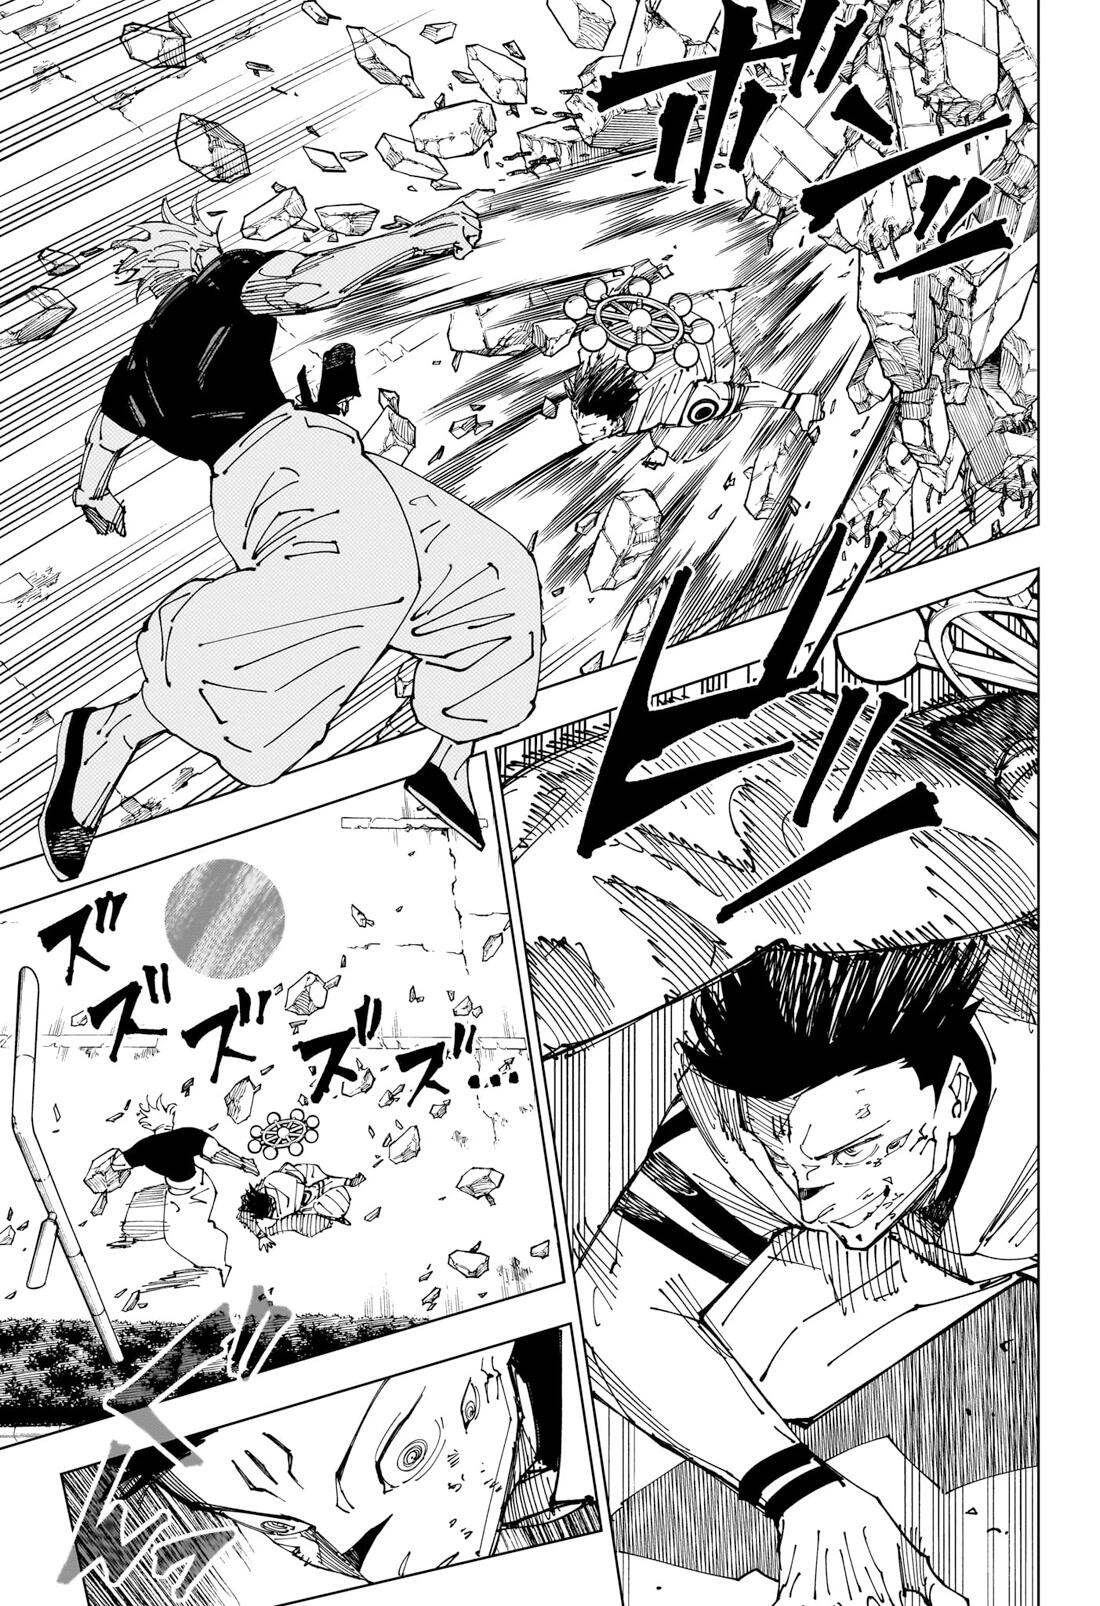 Jujutsu Kaisen Chapter 231: The Decisive Battle In The Uninhabited, Demon-Infested Shinjuku ⑨ page 7 - Mangakakalot